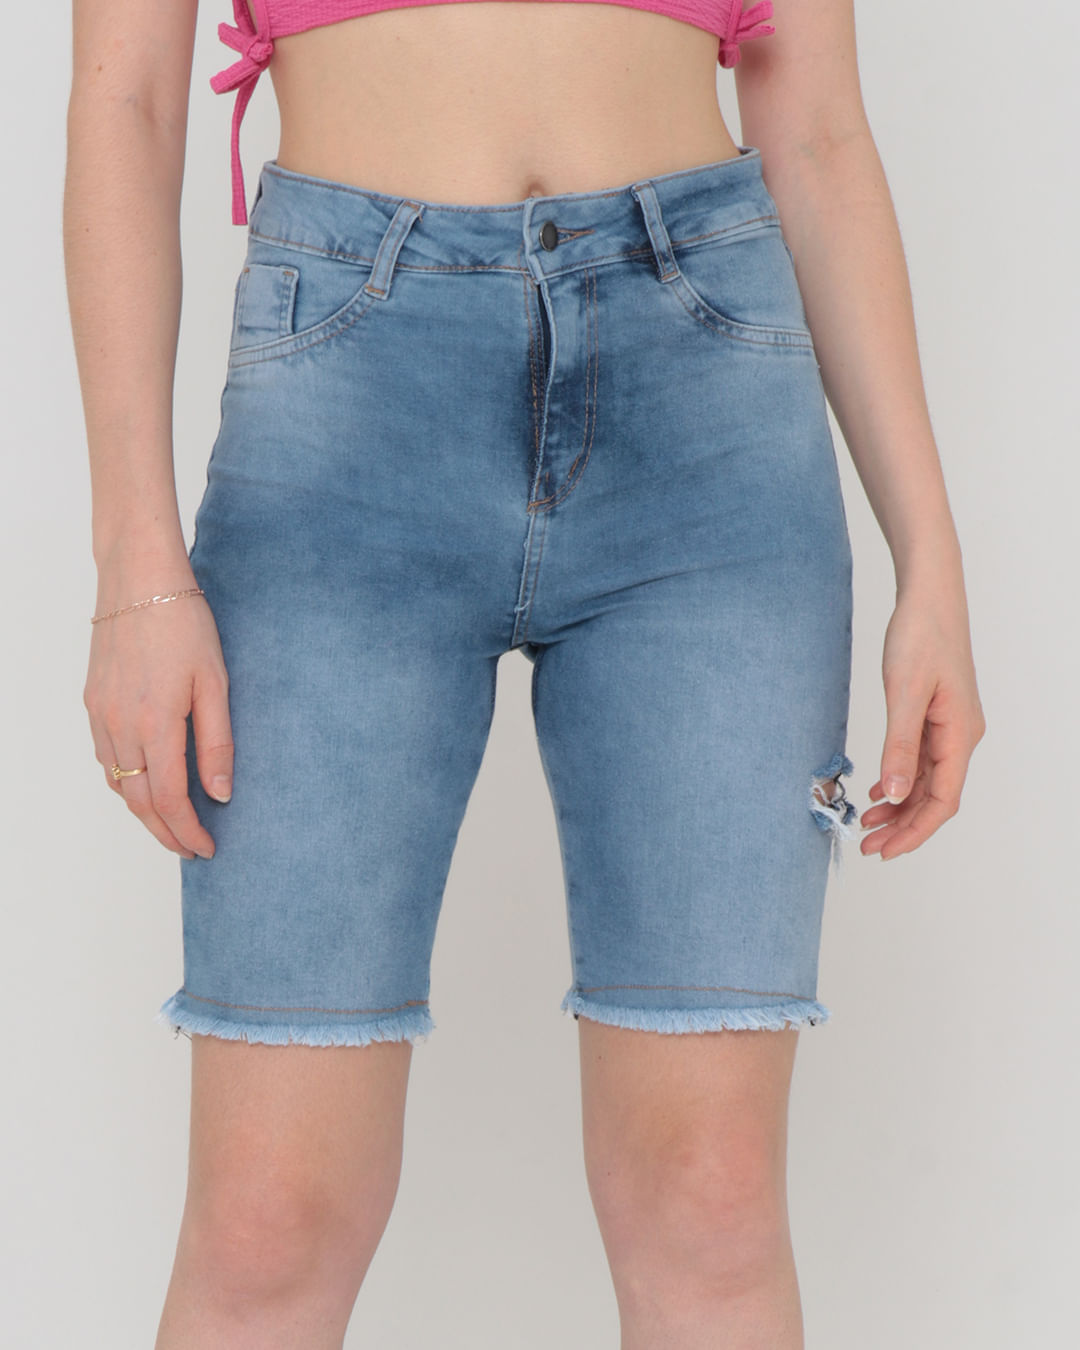 Short Jeans Feminino Curto Com Bolsos Azul